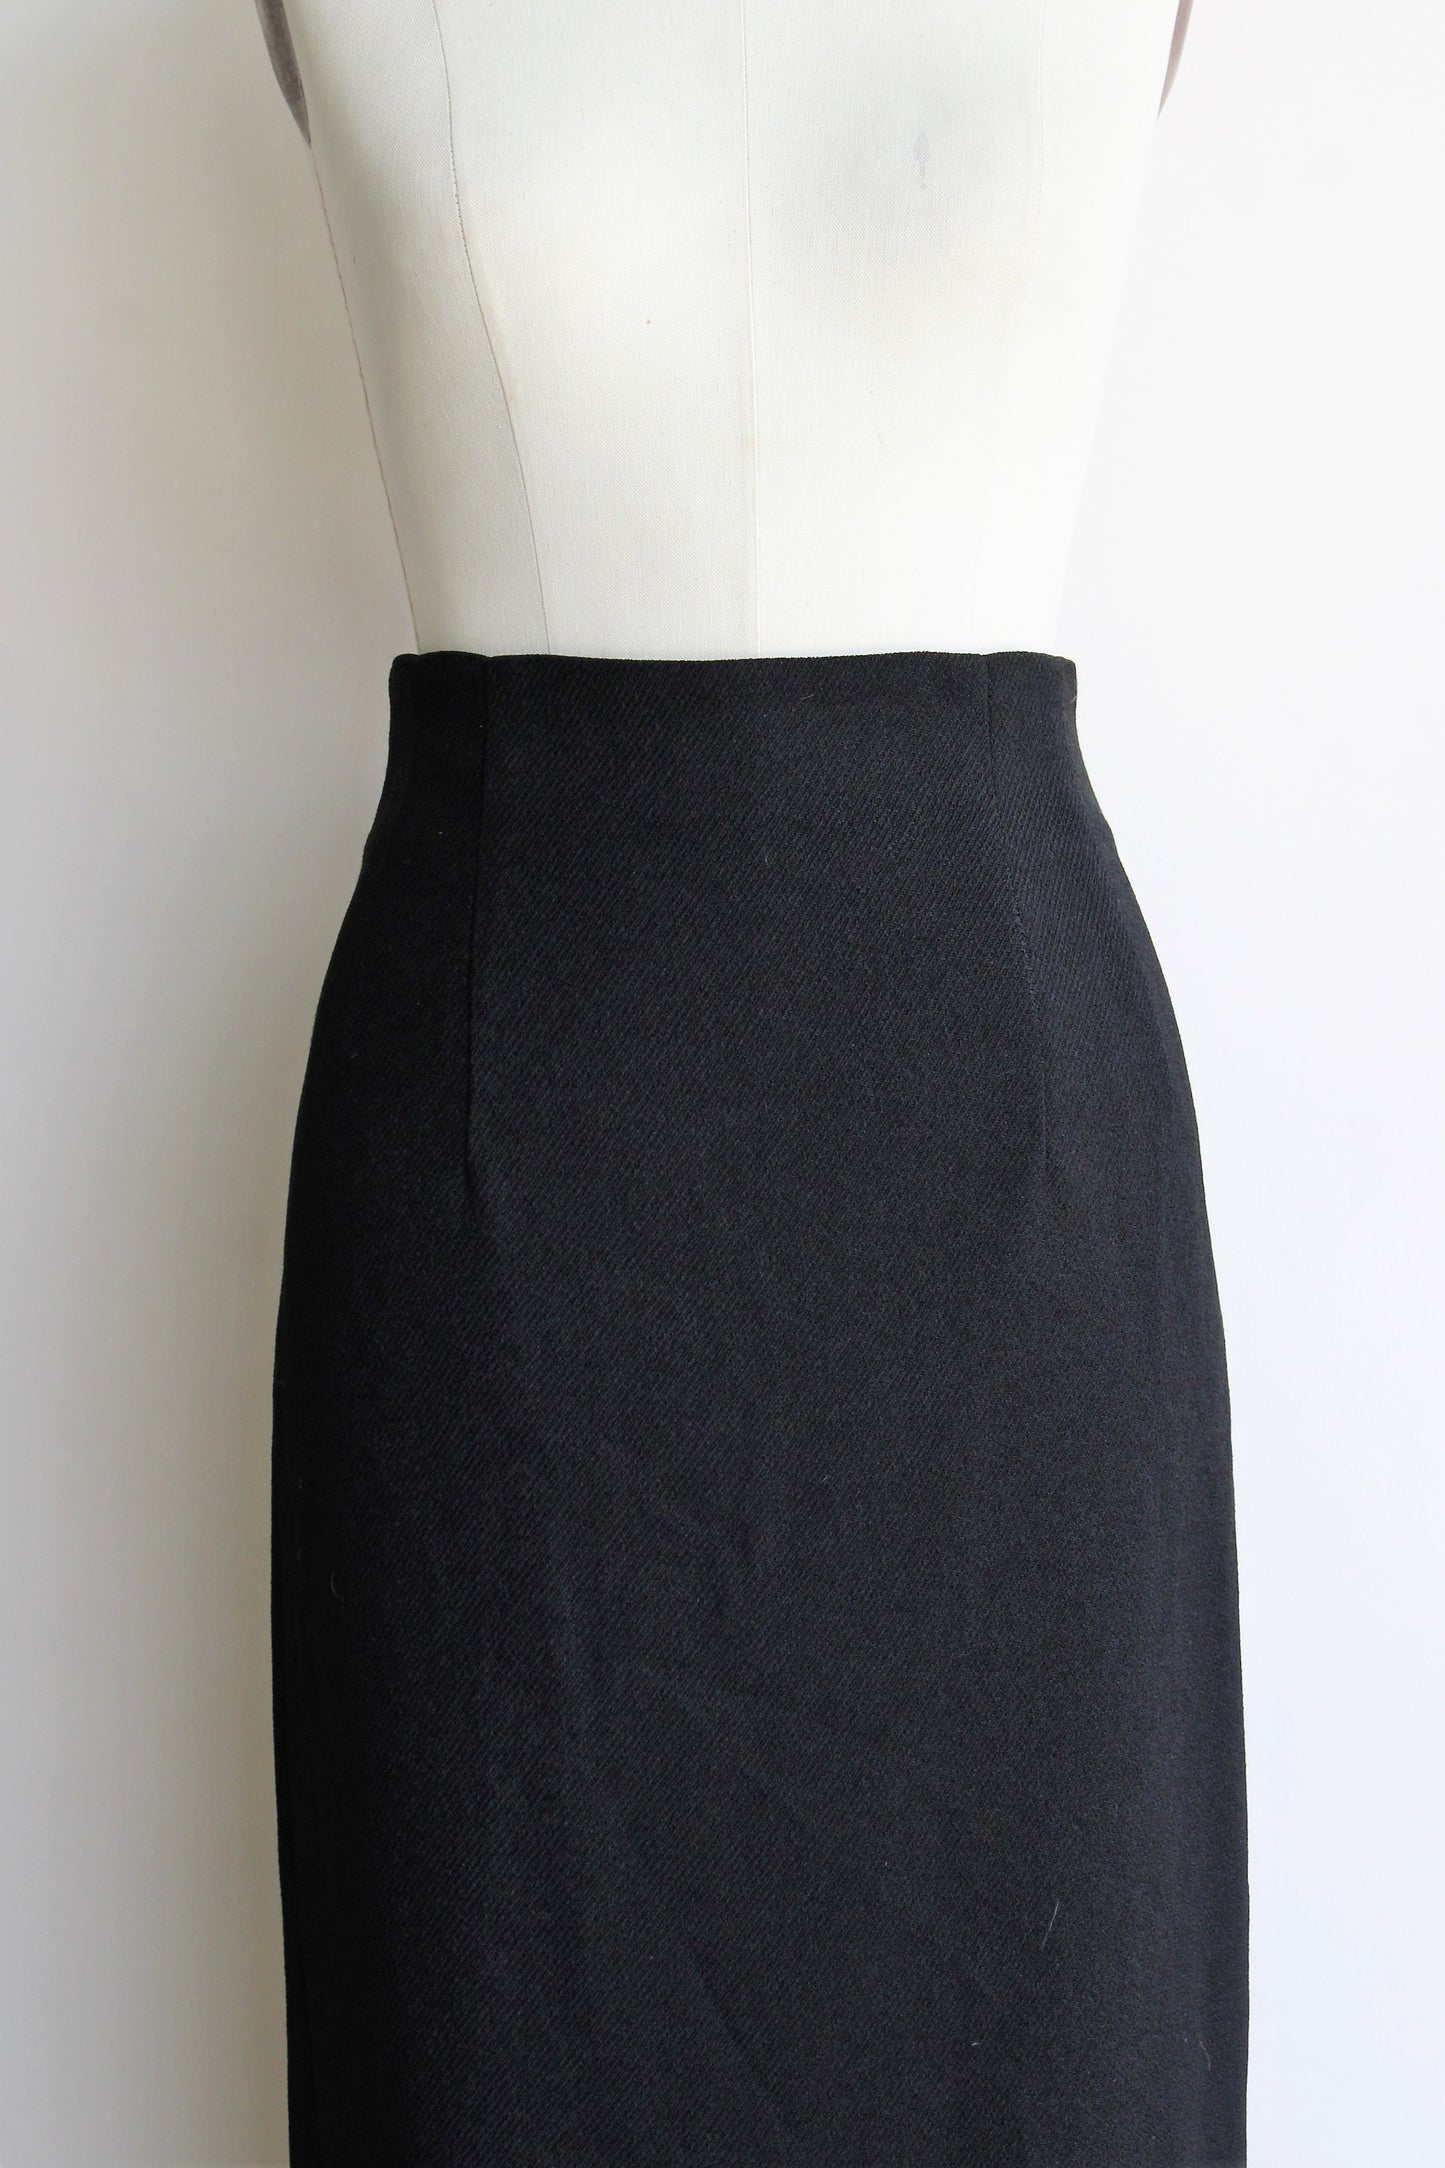 Vintage 1990s Black Pencil Skirt